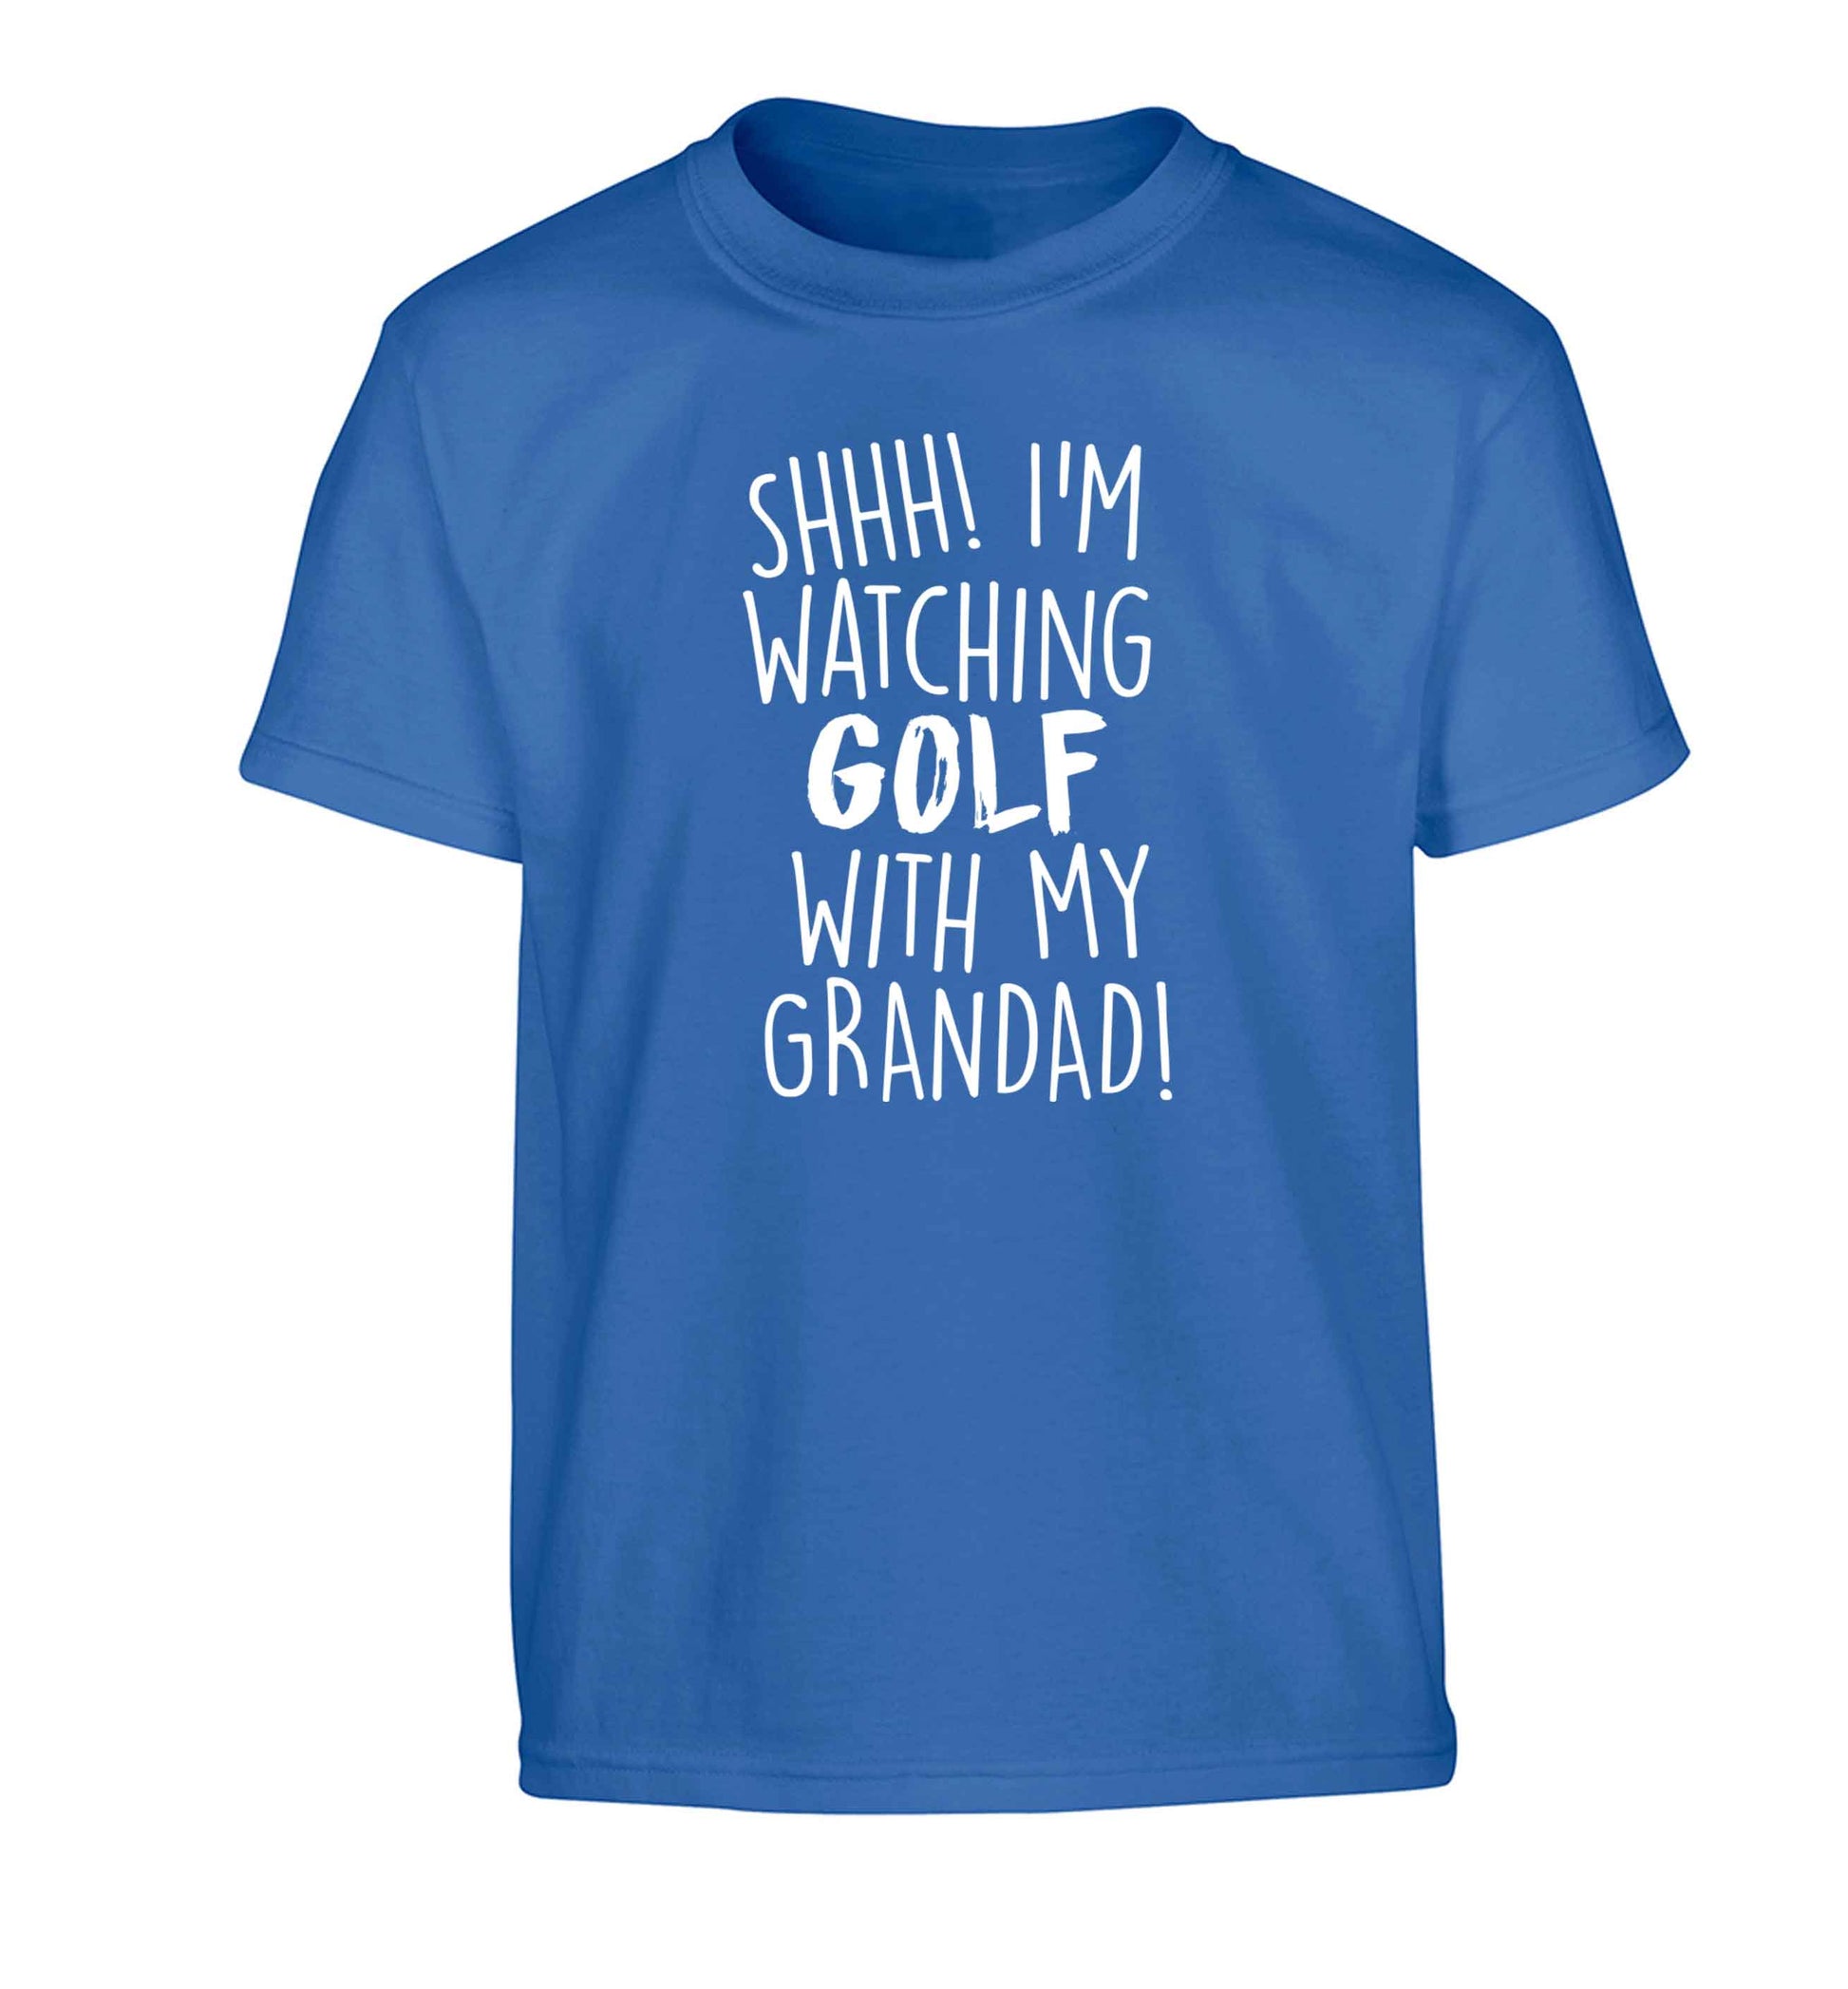 Shh I'm watching golf with my grandad Children's blue Tshirt 12-13 Years